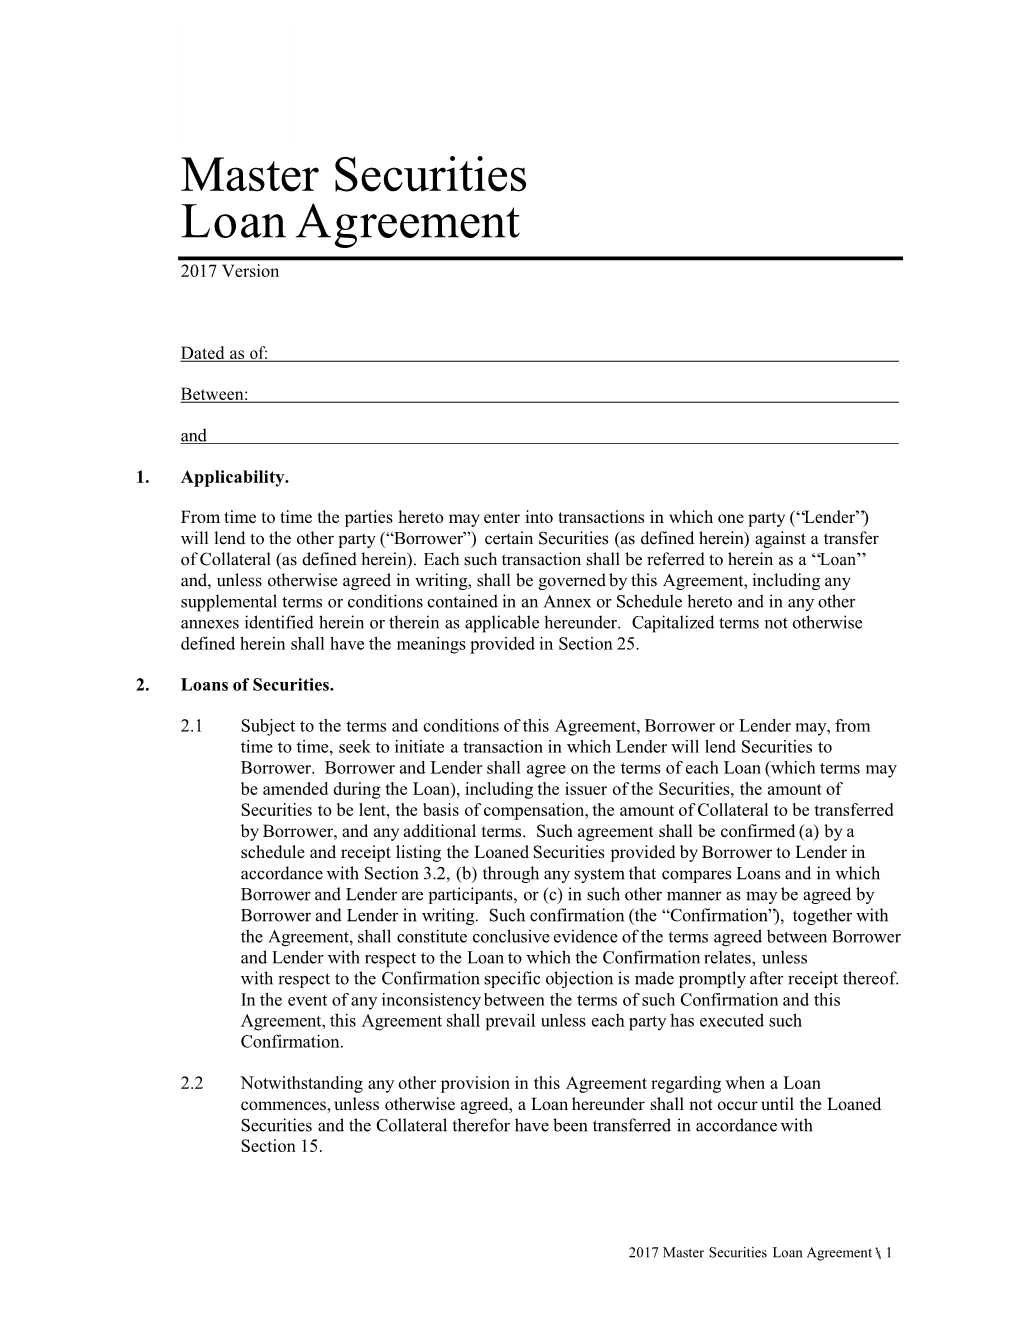 Master Securities Loan Agreement (MSLA)